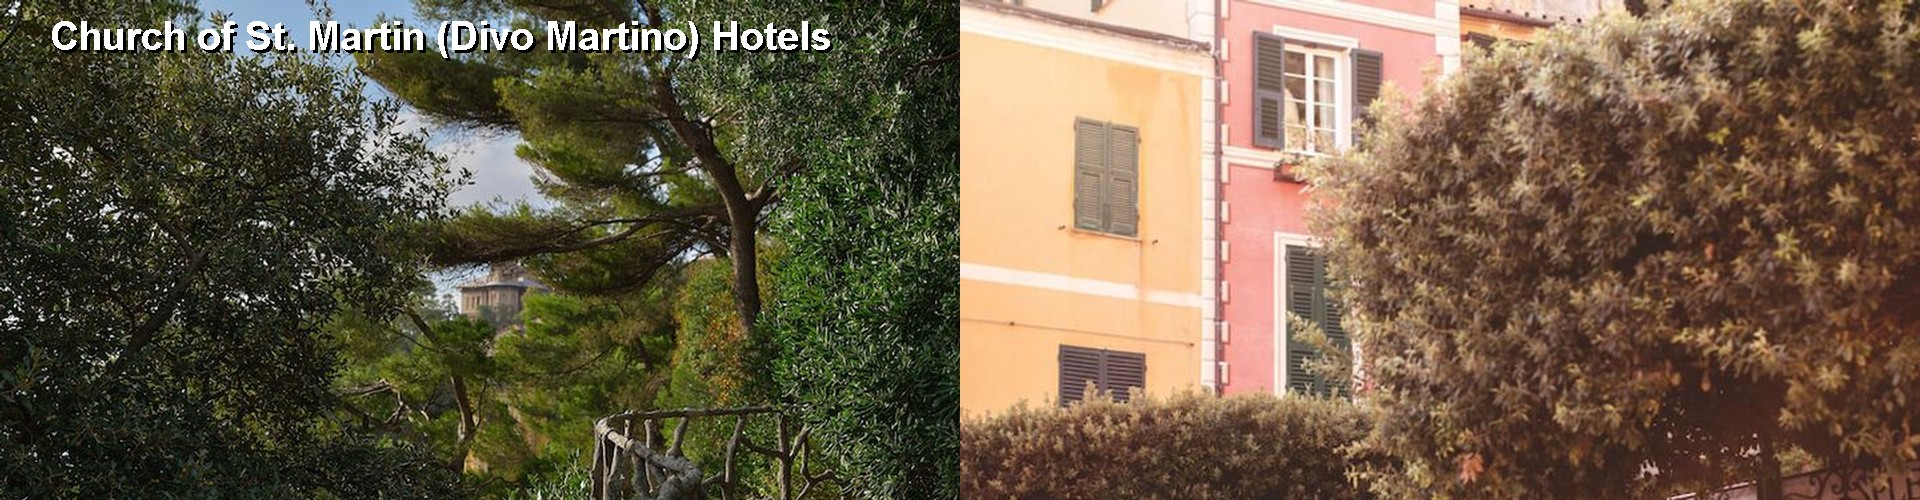 5 Best Hotels near Church of St. Martin (Divo Martino)